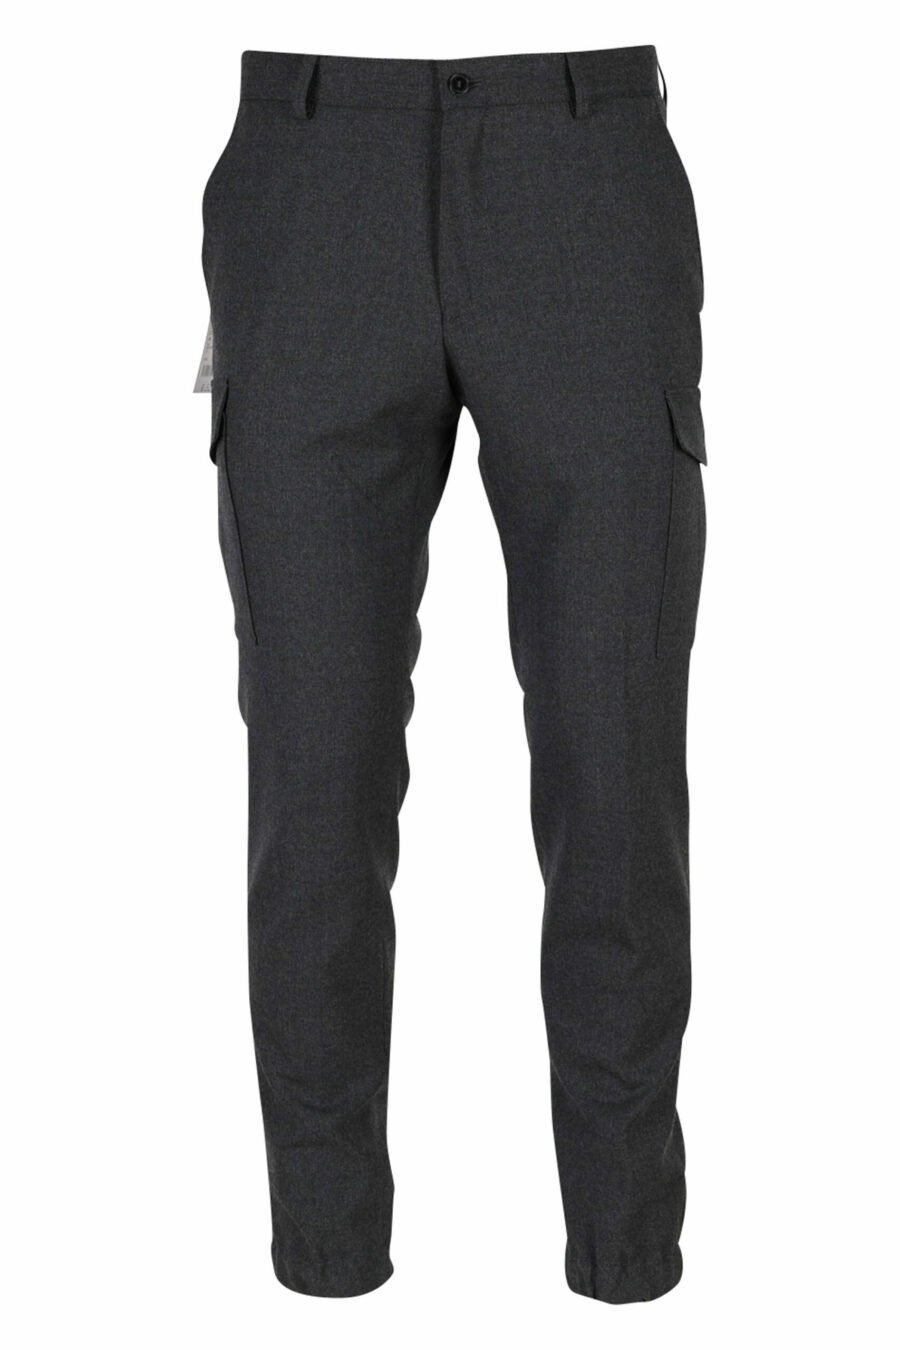 Pantalón de traje gris - 4062226397018 12 scaled